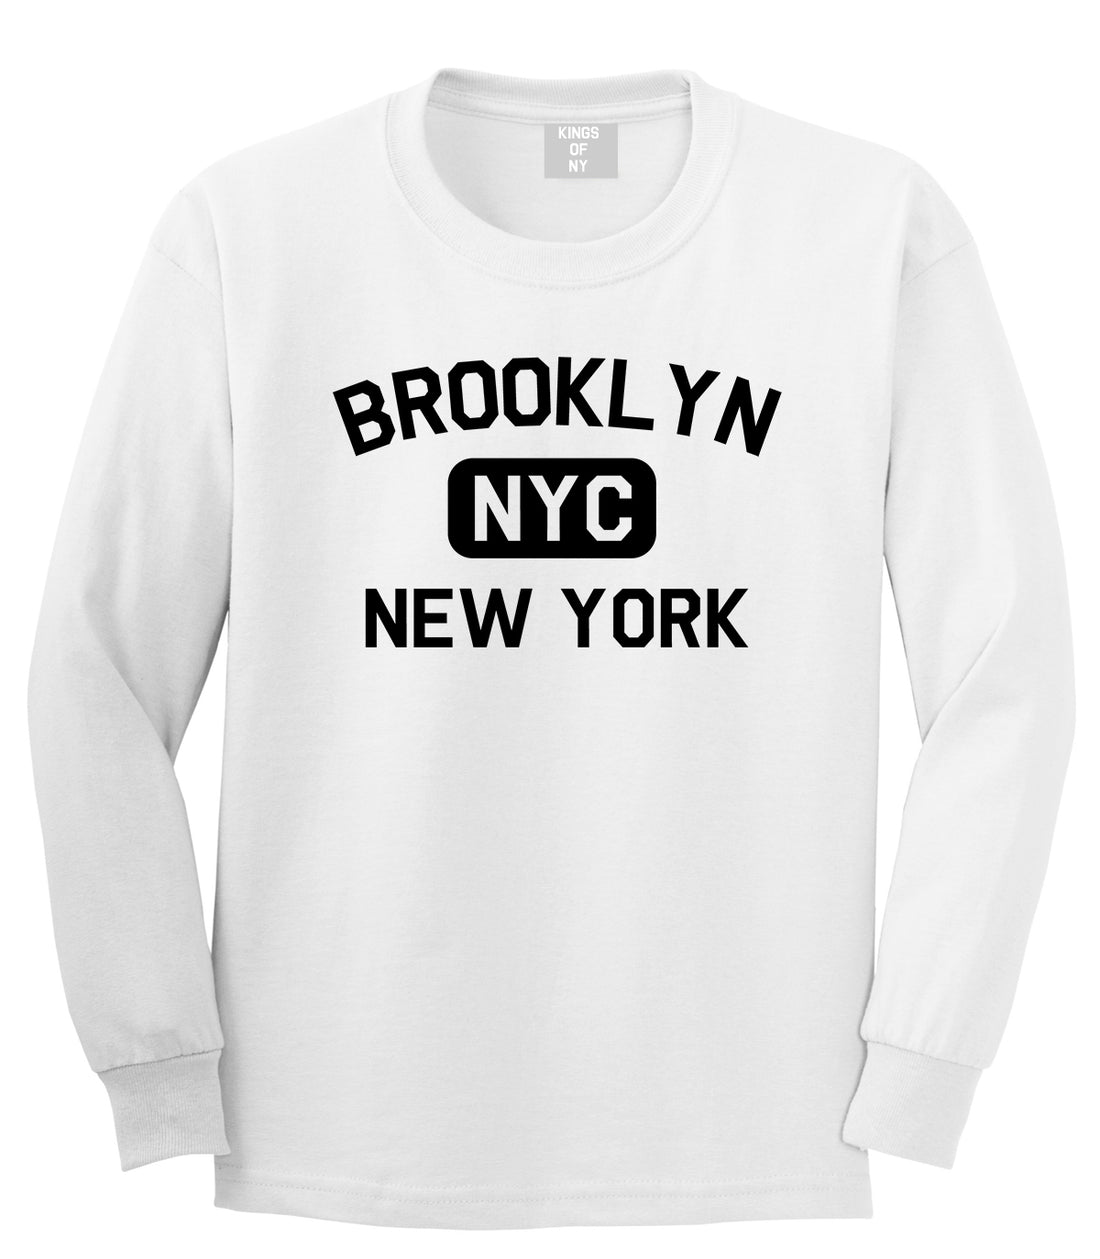 Brooklyn Gym NYC New York Mens Long Sleeve T-Shirt White